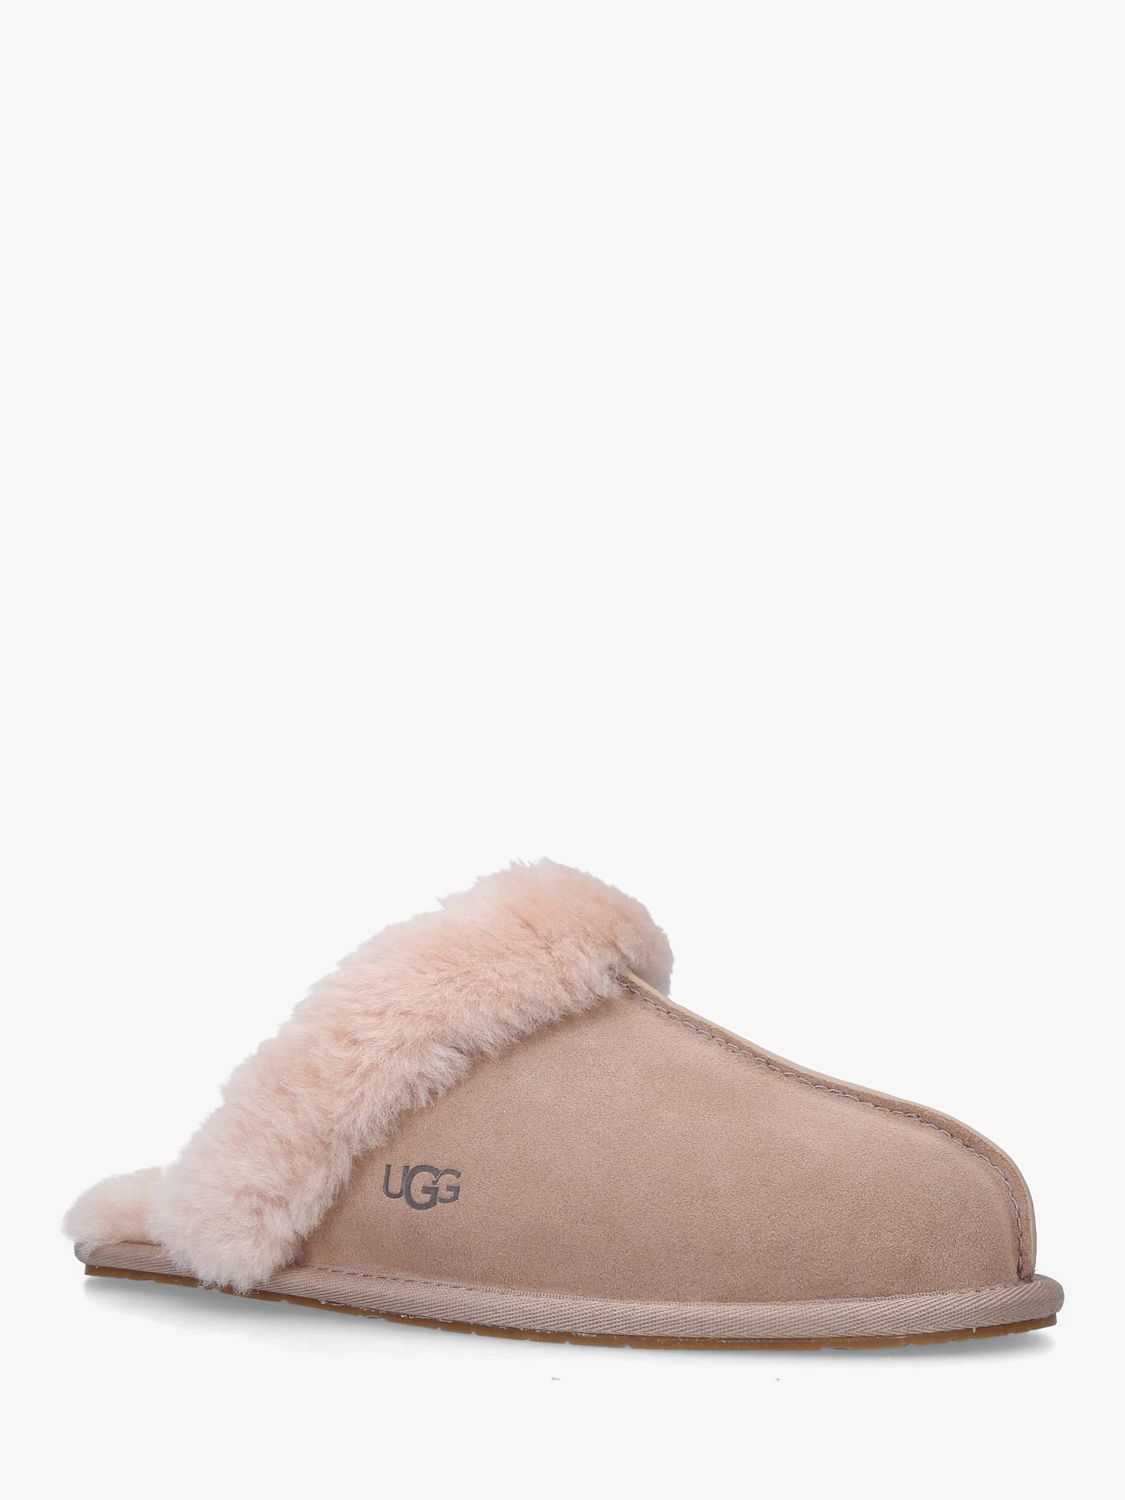 grey ugg scuffette slippers